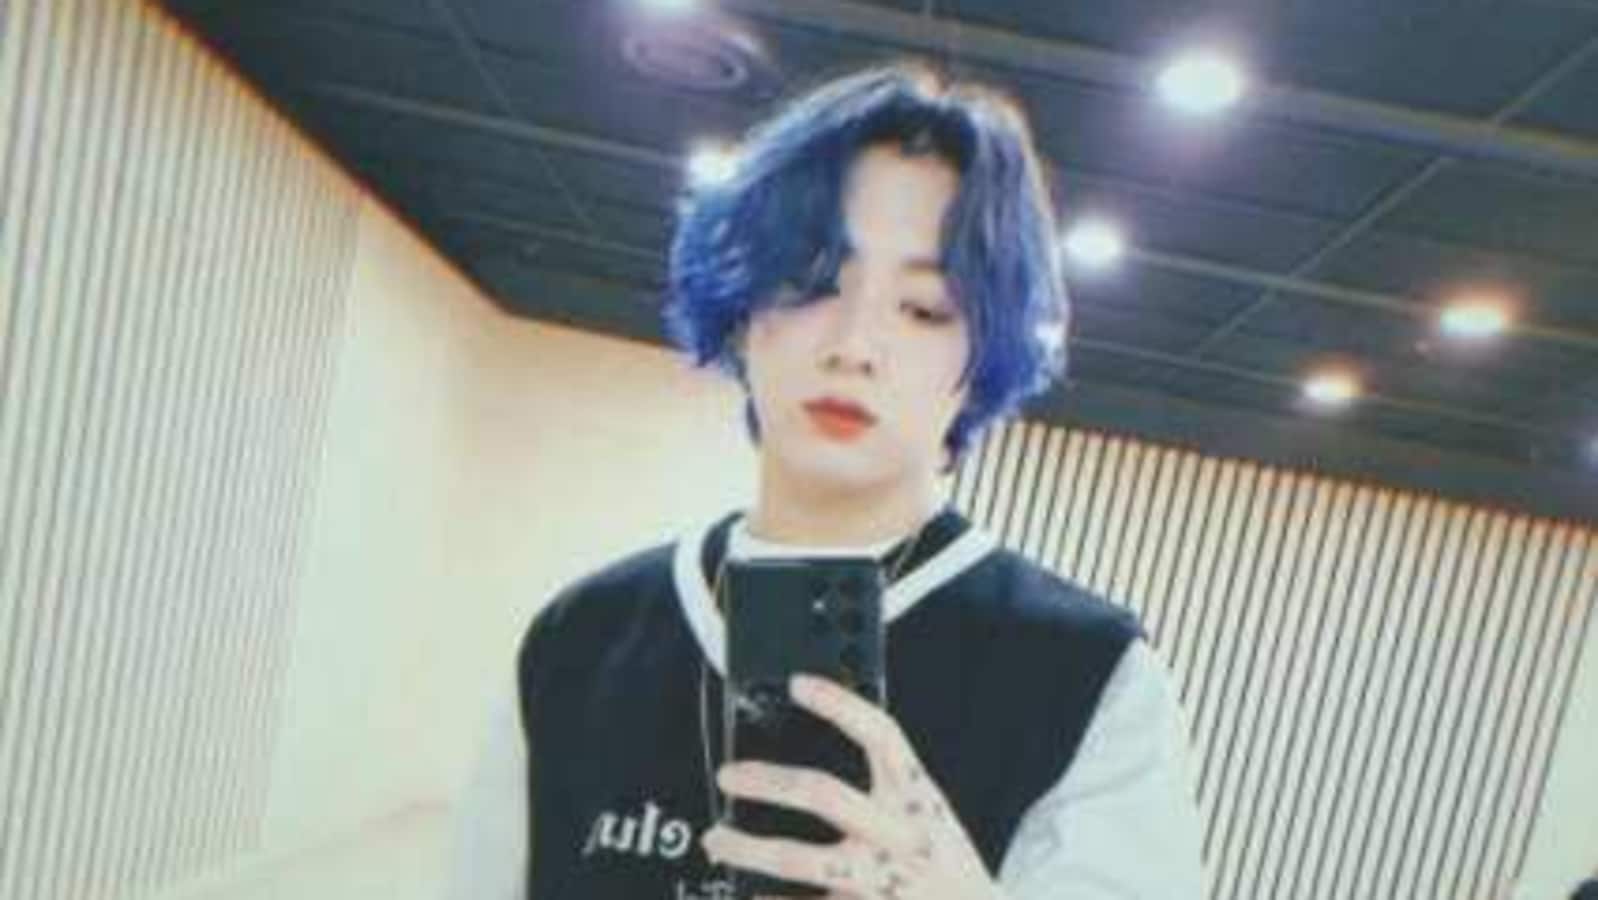 Blue hair guy BTS - wide 9